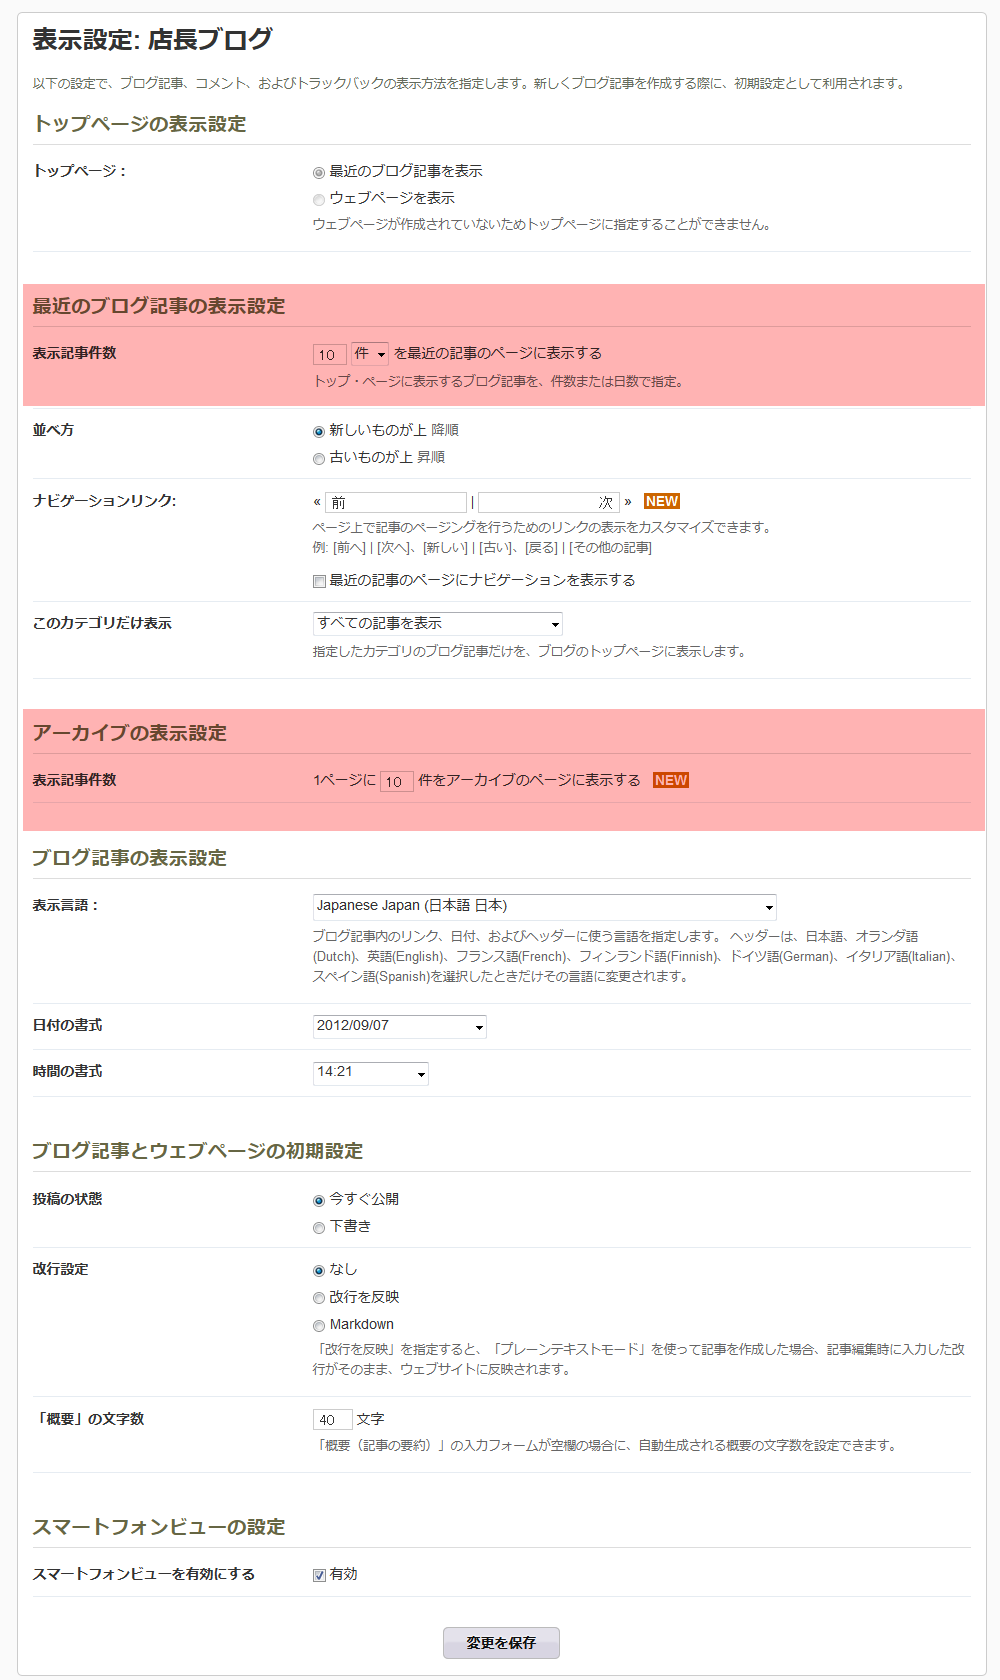 http://www.sixapart.jp/lekumo/bb/news/pageveaw01-02.png